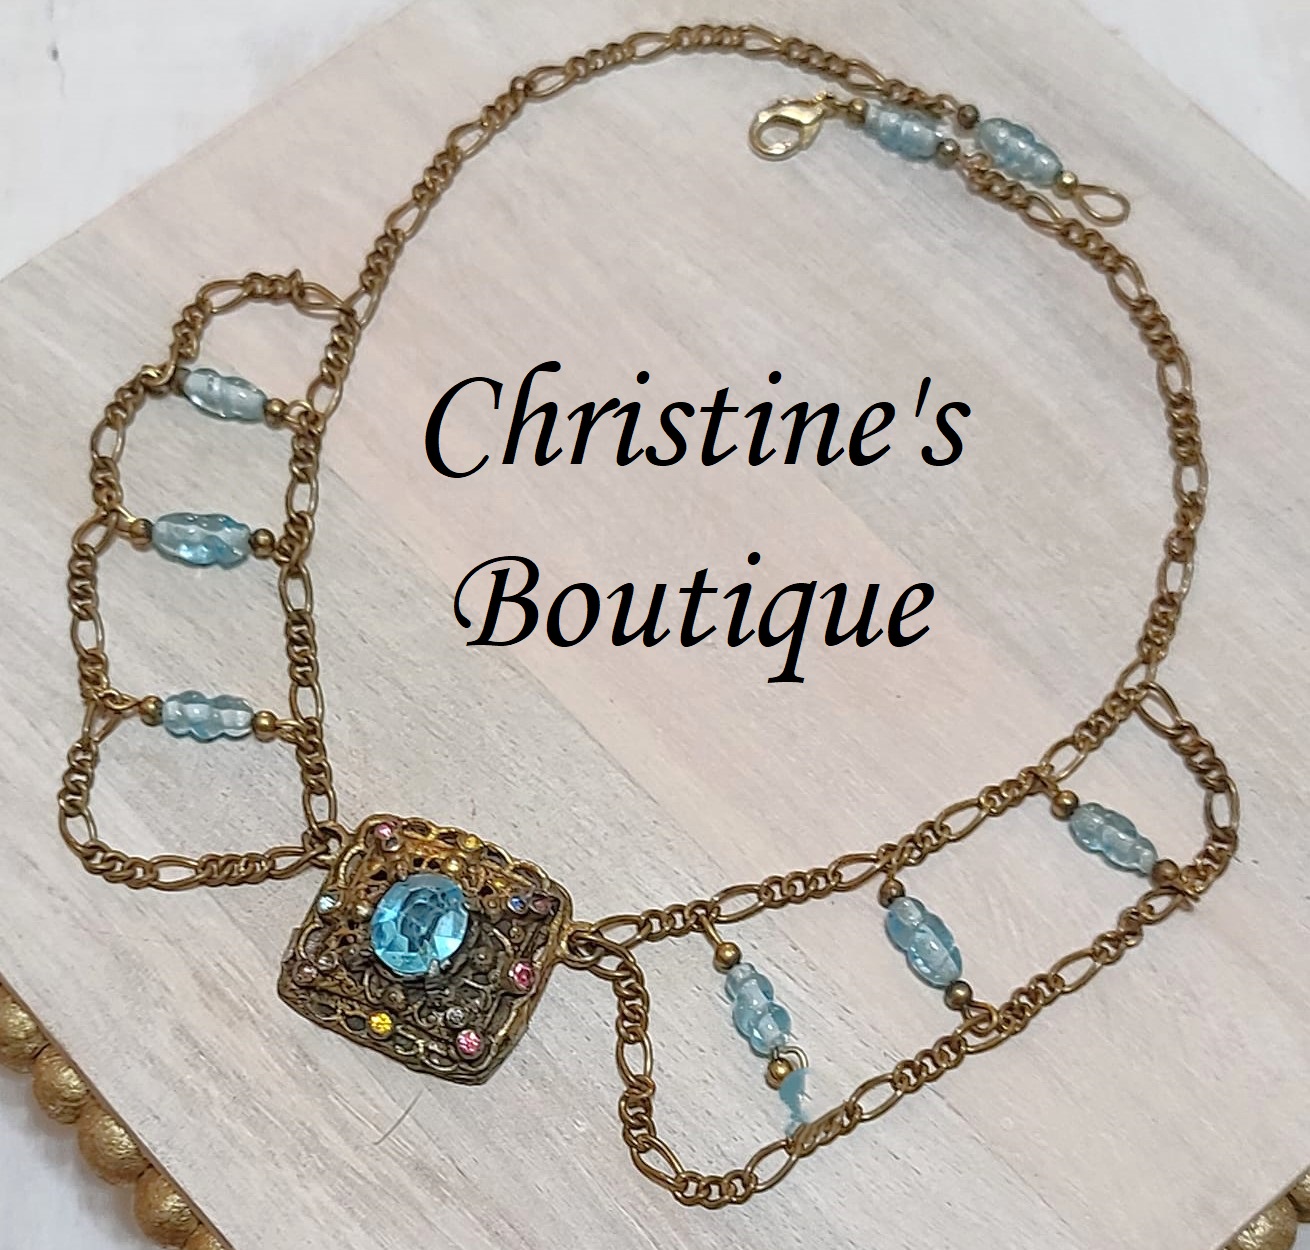 Vintage Blue Topaz Rhinestone & Glass Princess Necklace